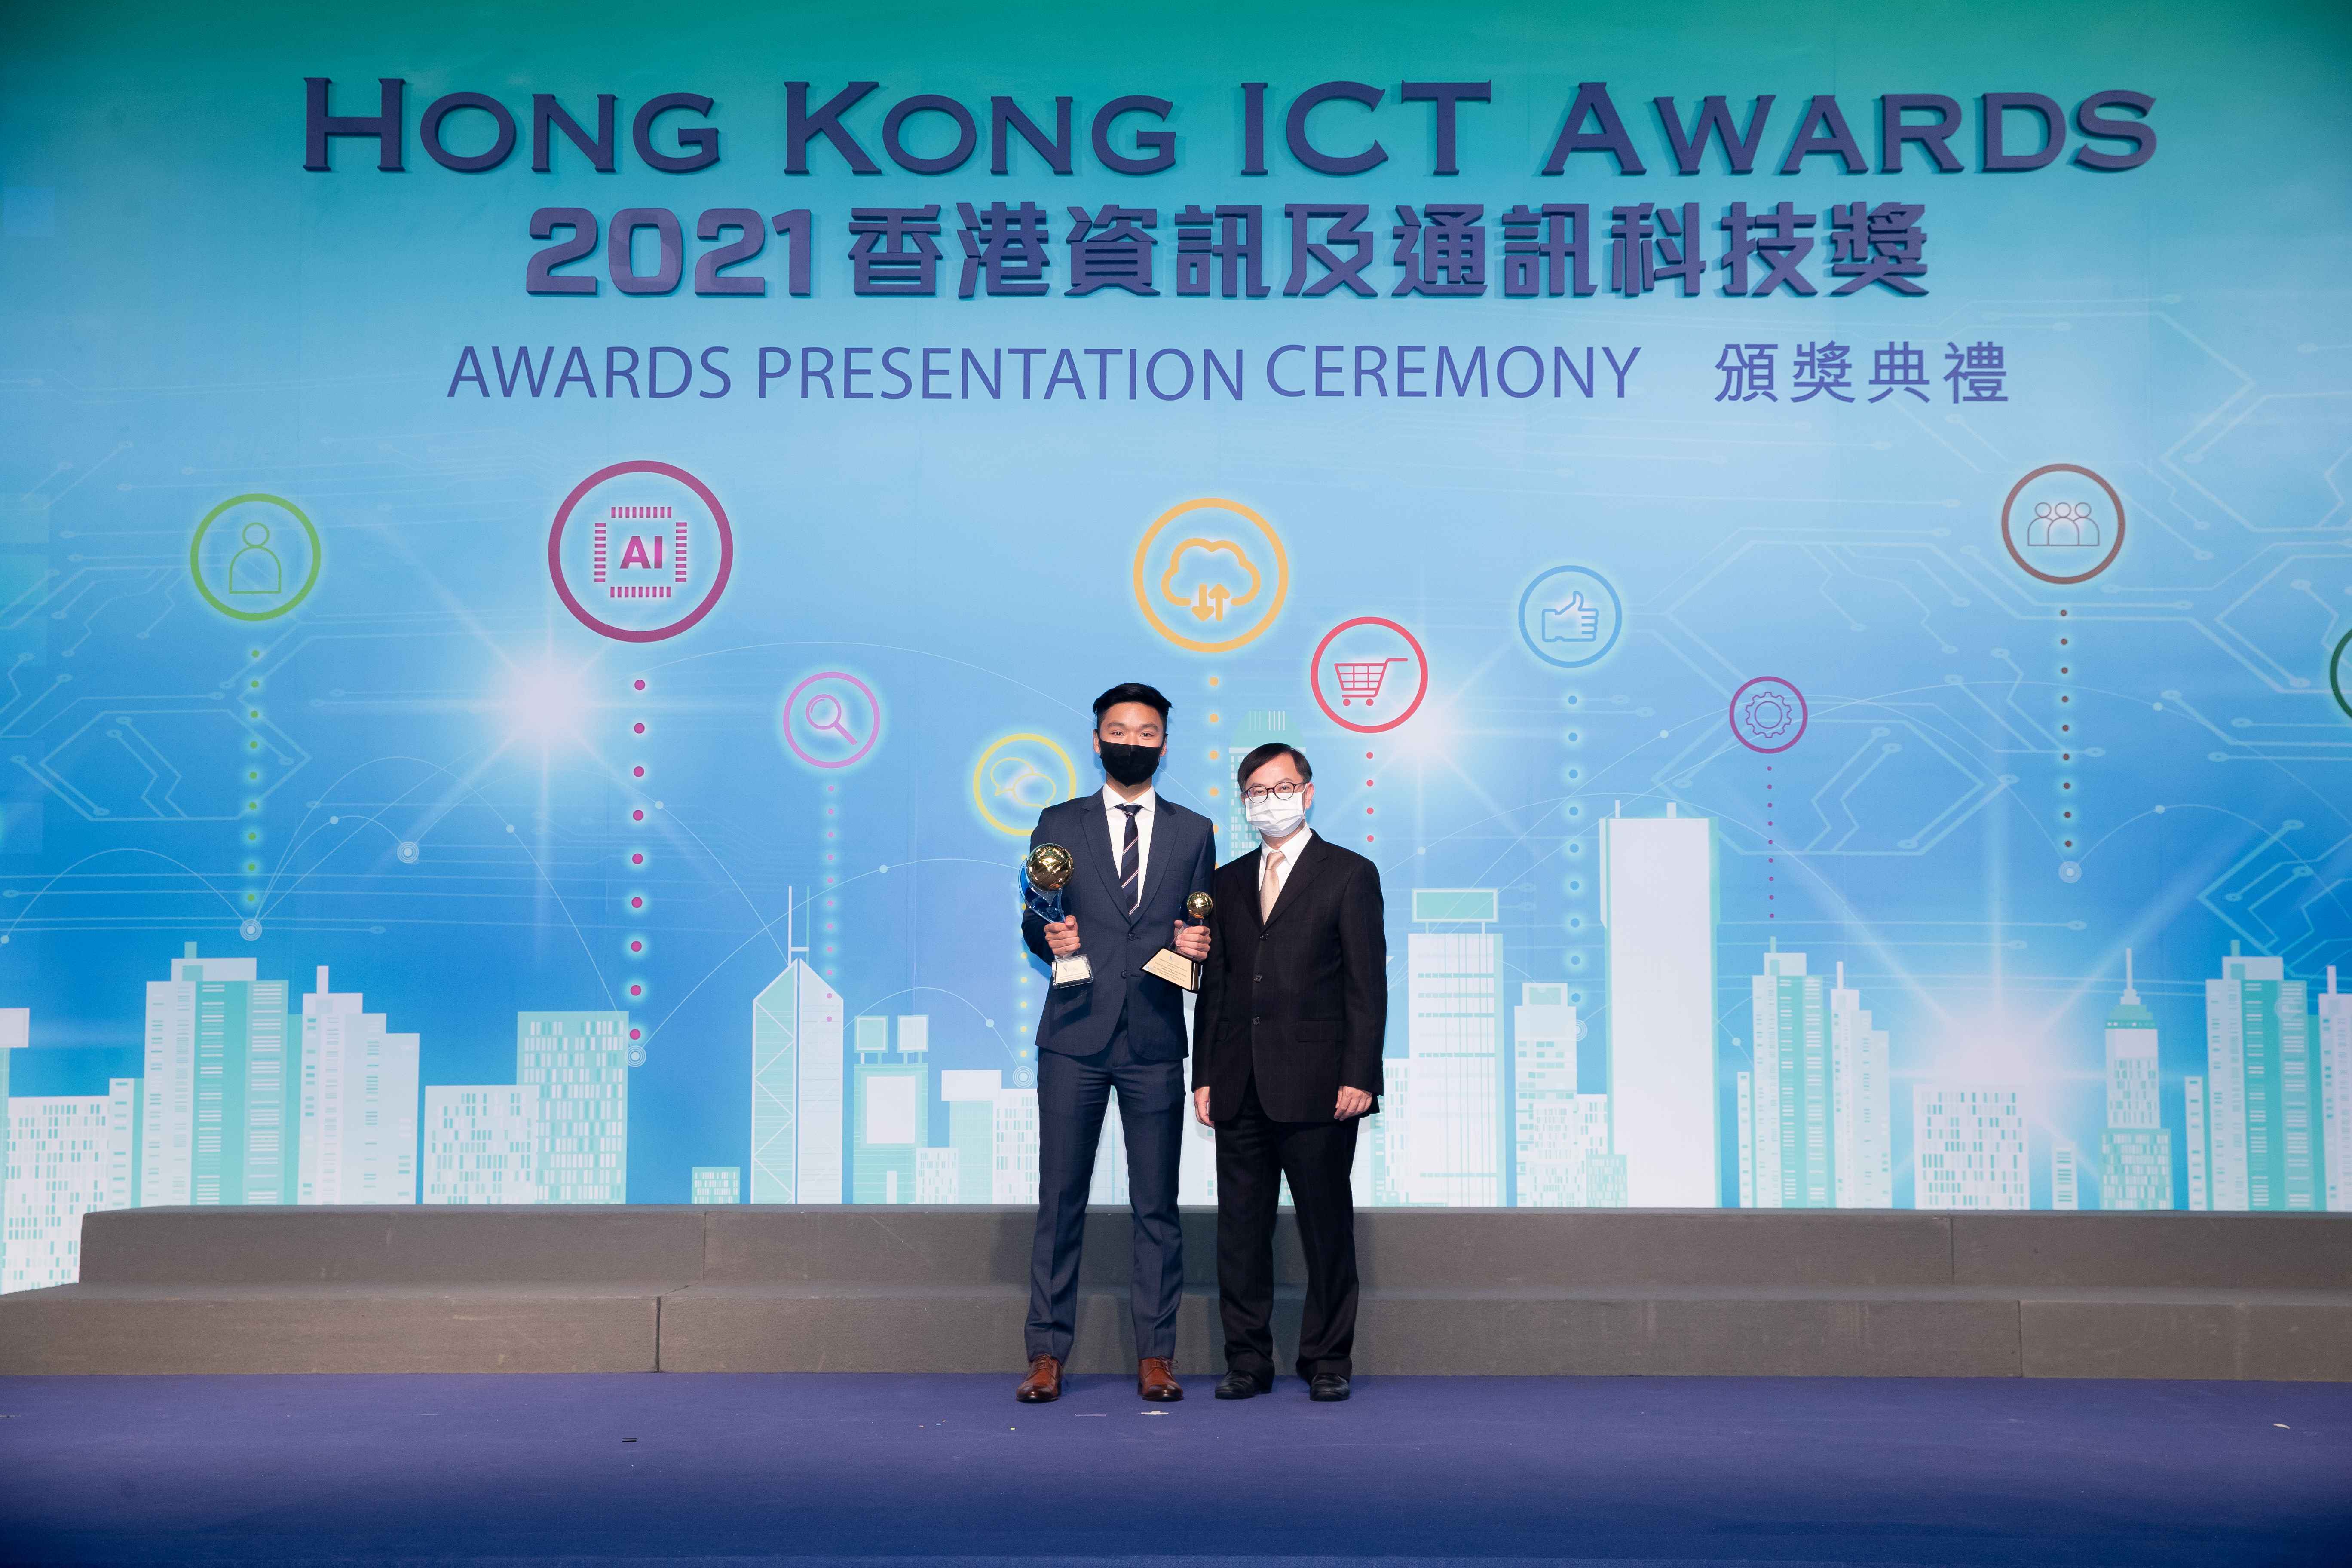 Hong Kong ICT Awards 2021 Student Innovation Grand Award Winner